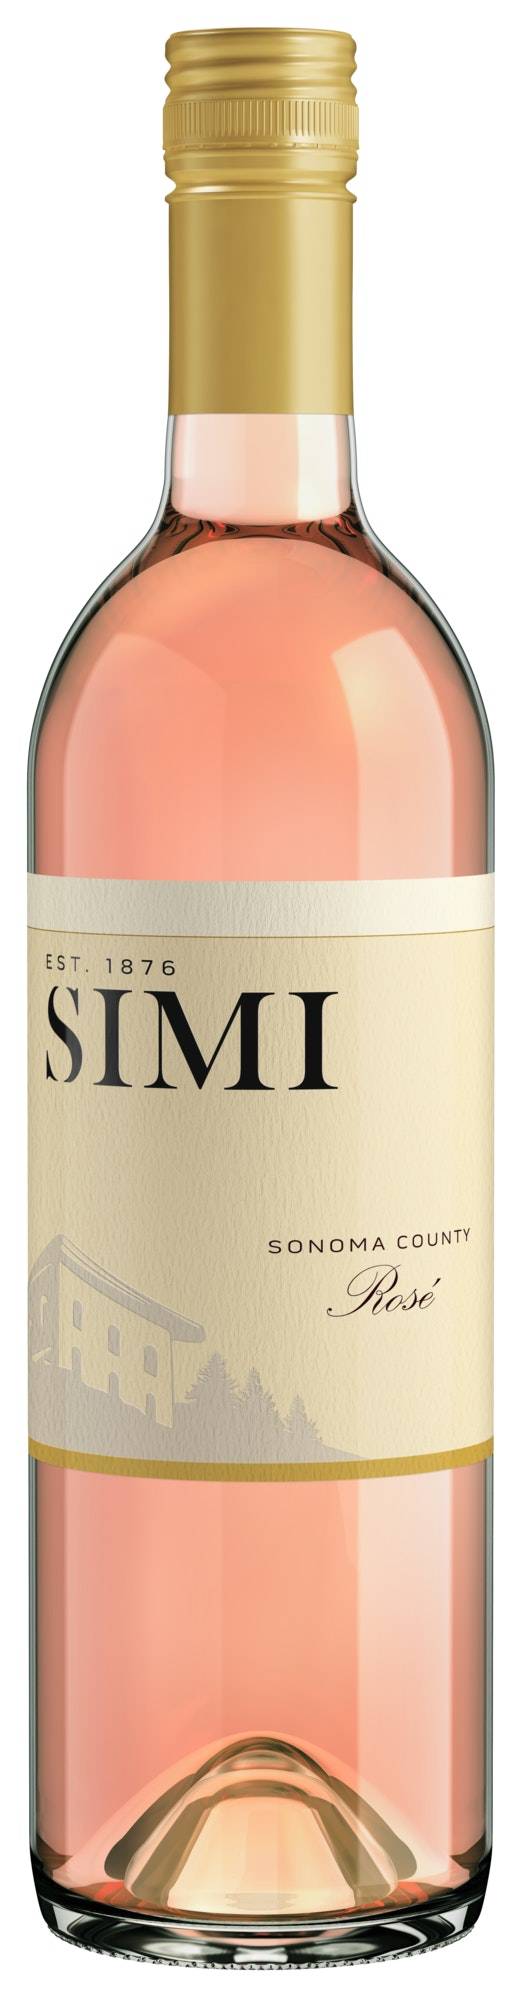 Simi Sonoma County Dry Rose Wine (750 ml)